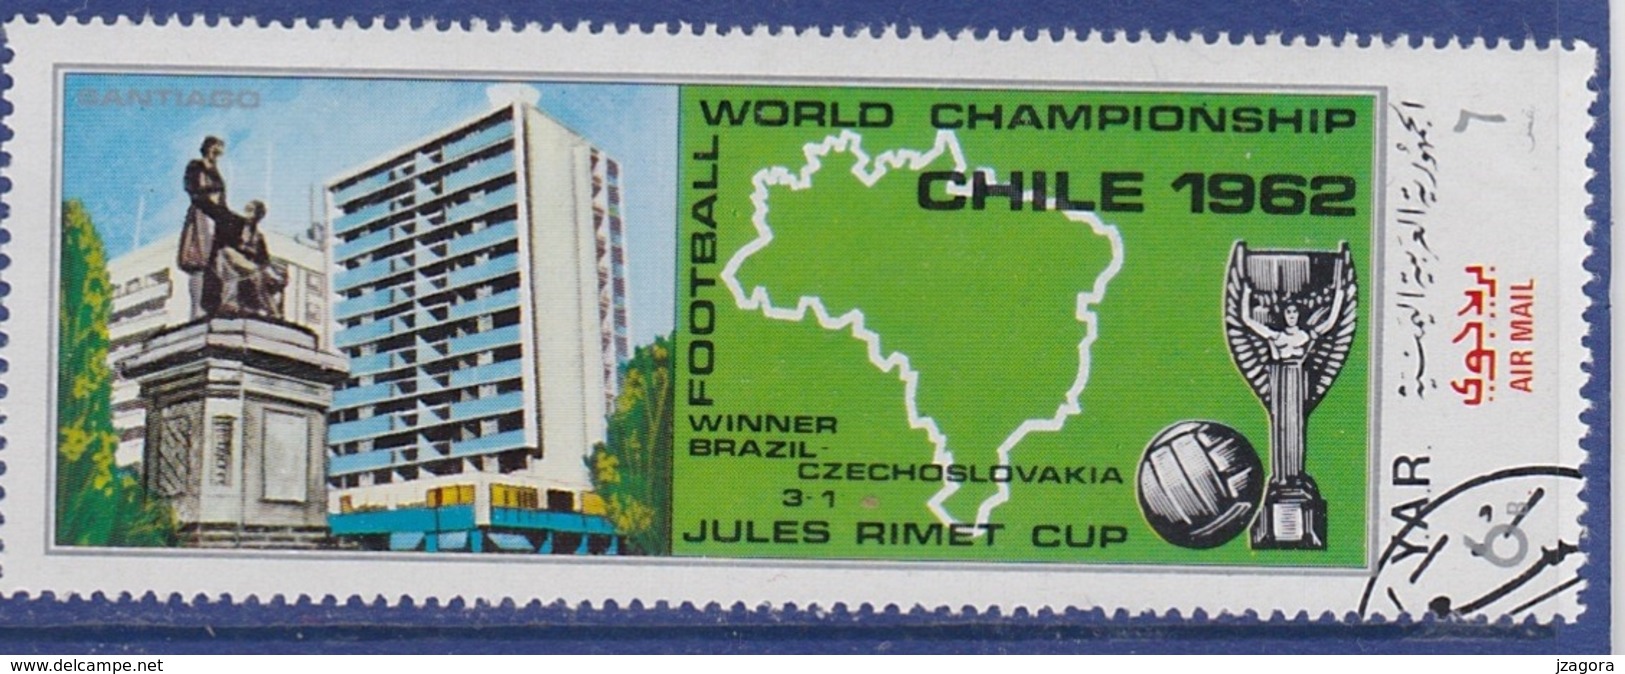 SOCCER FOOTBALL WORLD CHAMPIONSHIP MUNDIAL CHILE 1962 - YAR YEMEN - 1962 – Chili